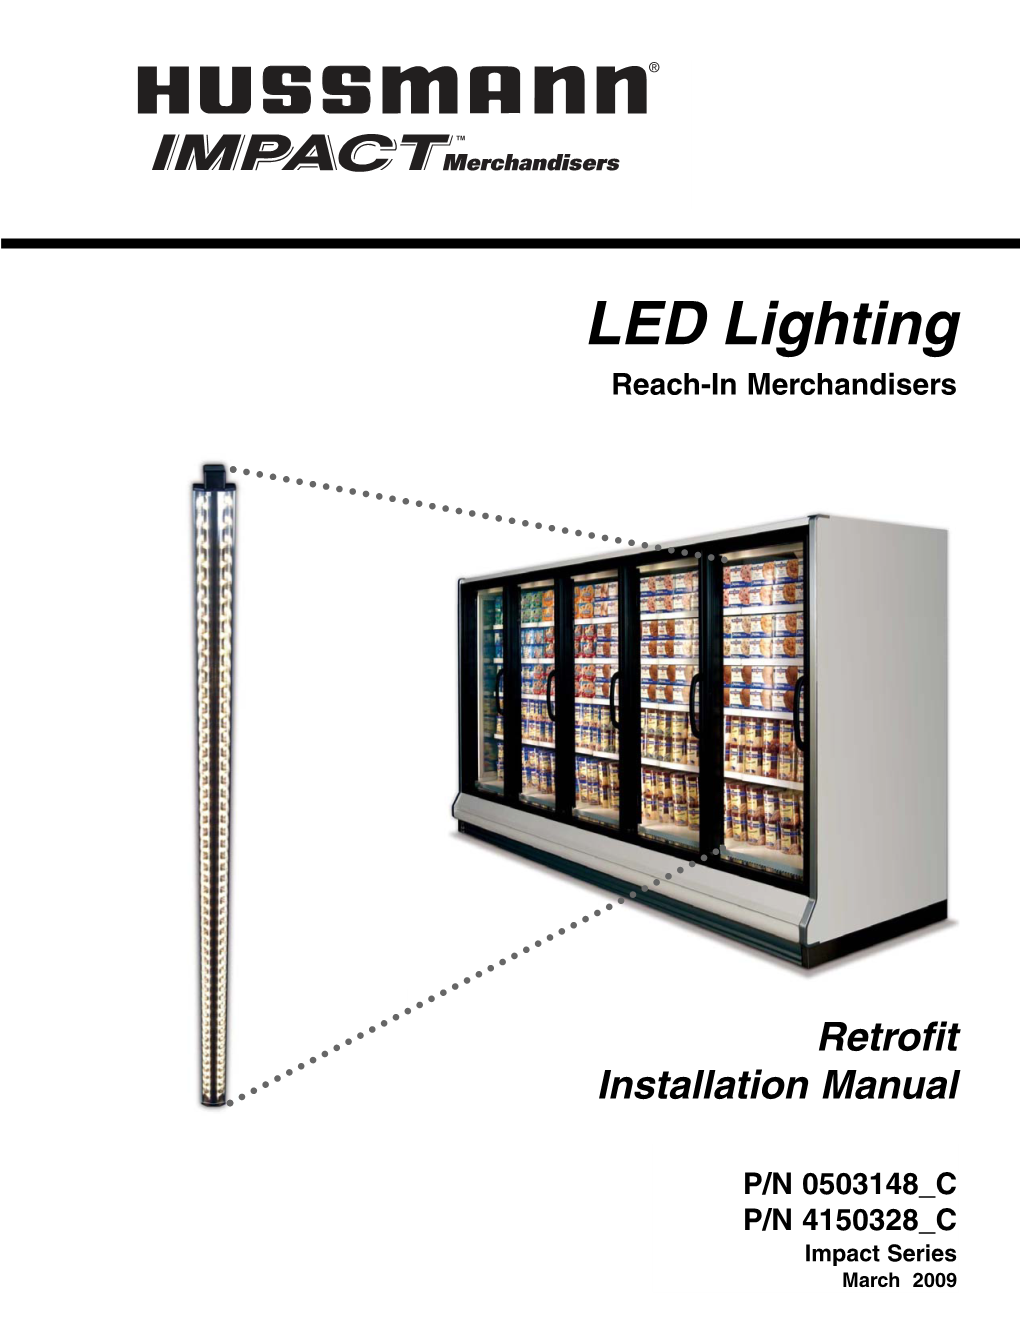 LED Lighting Reach-In Merchandisers